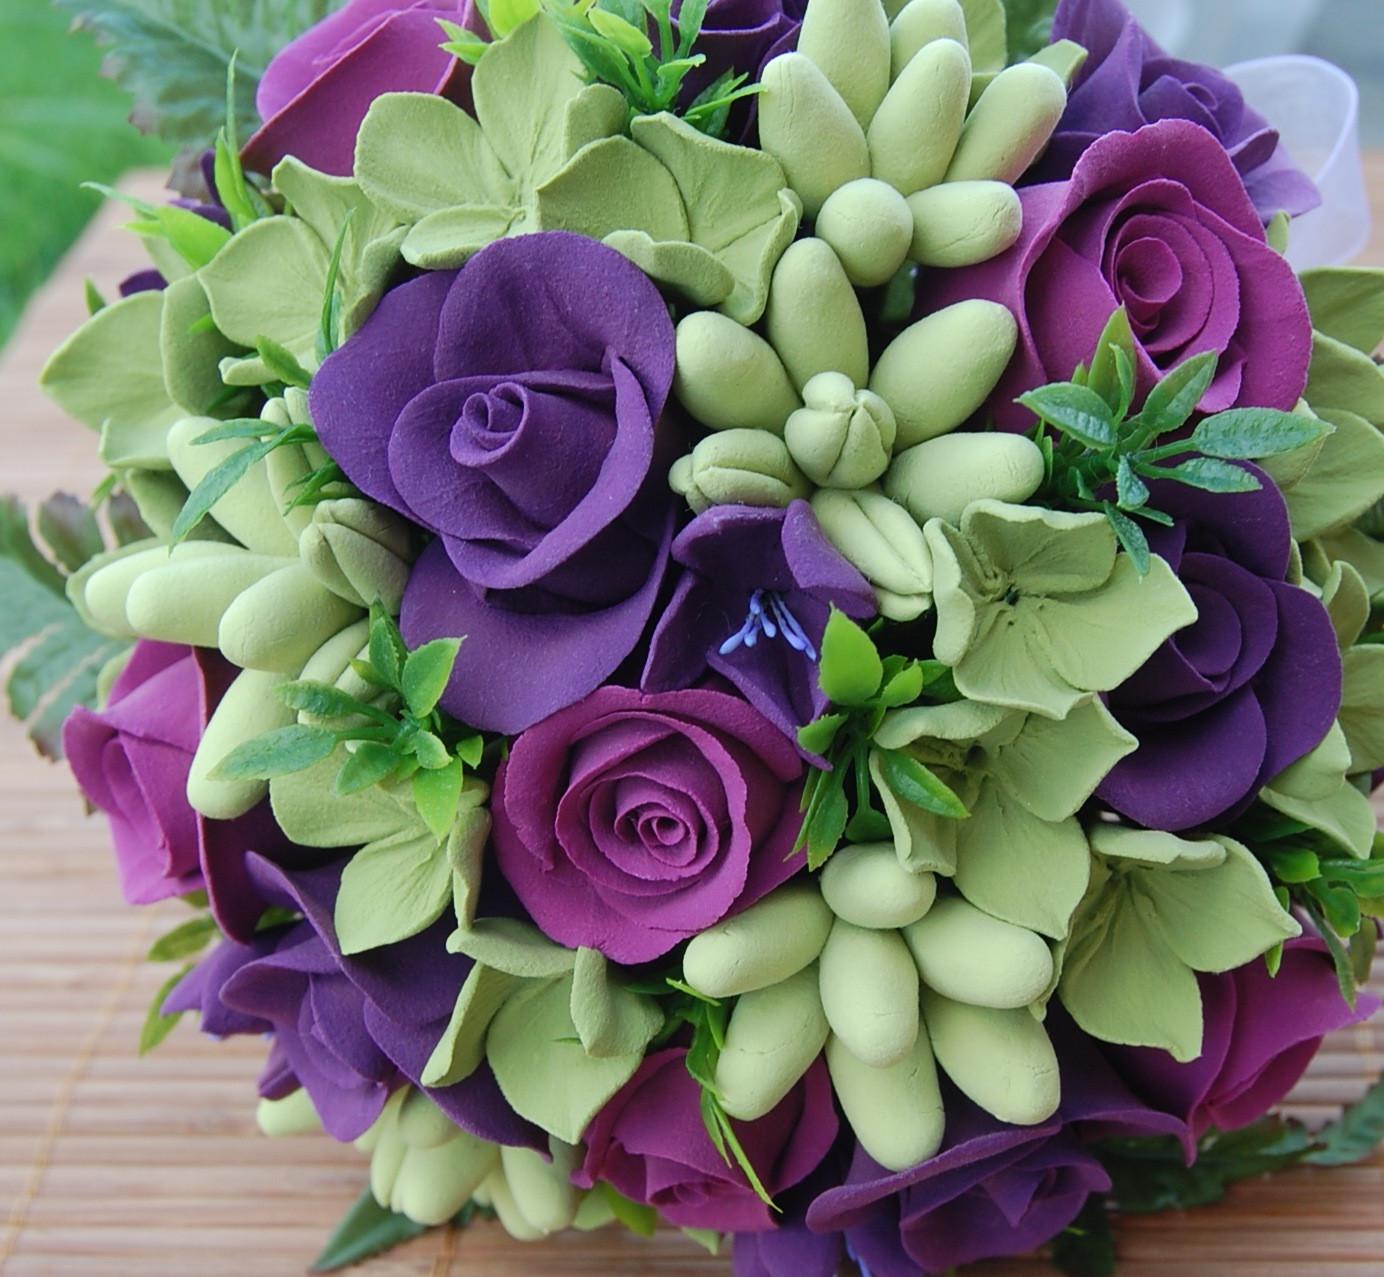 purple and green wedding theme